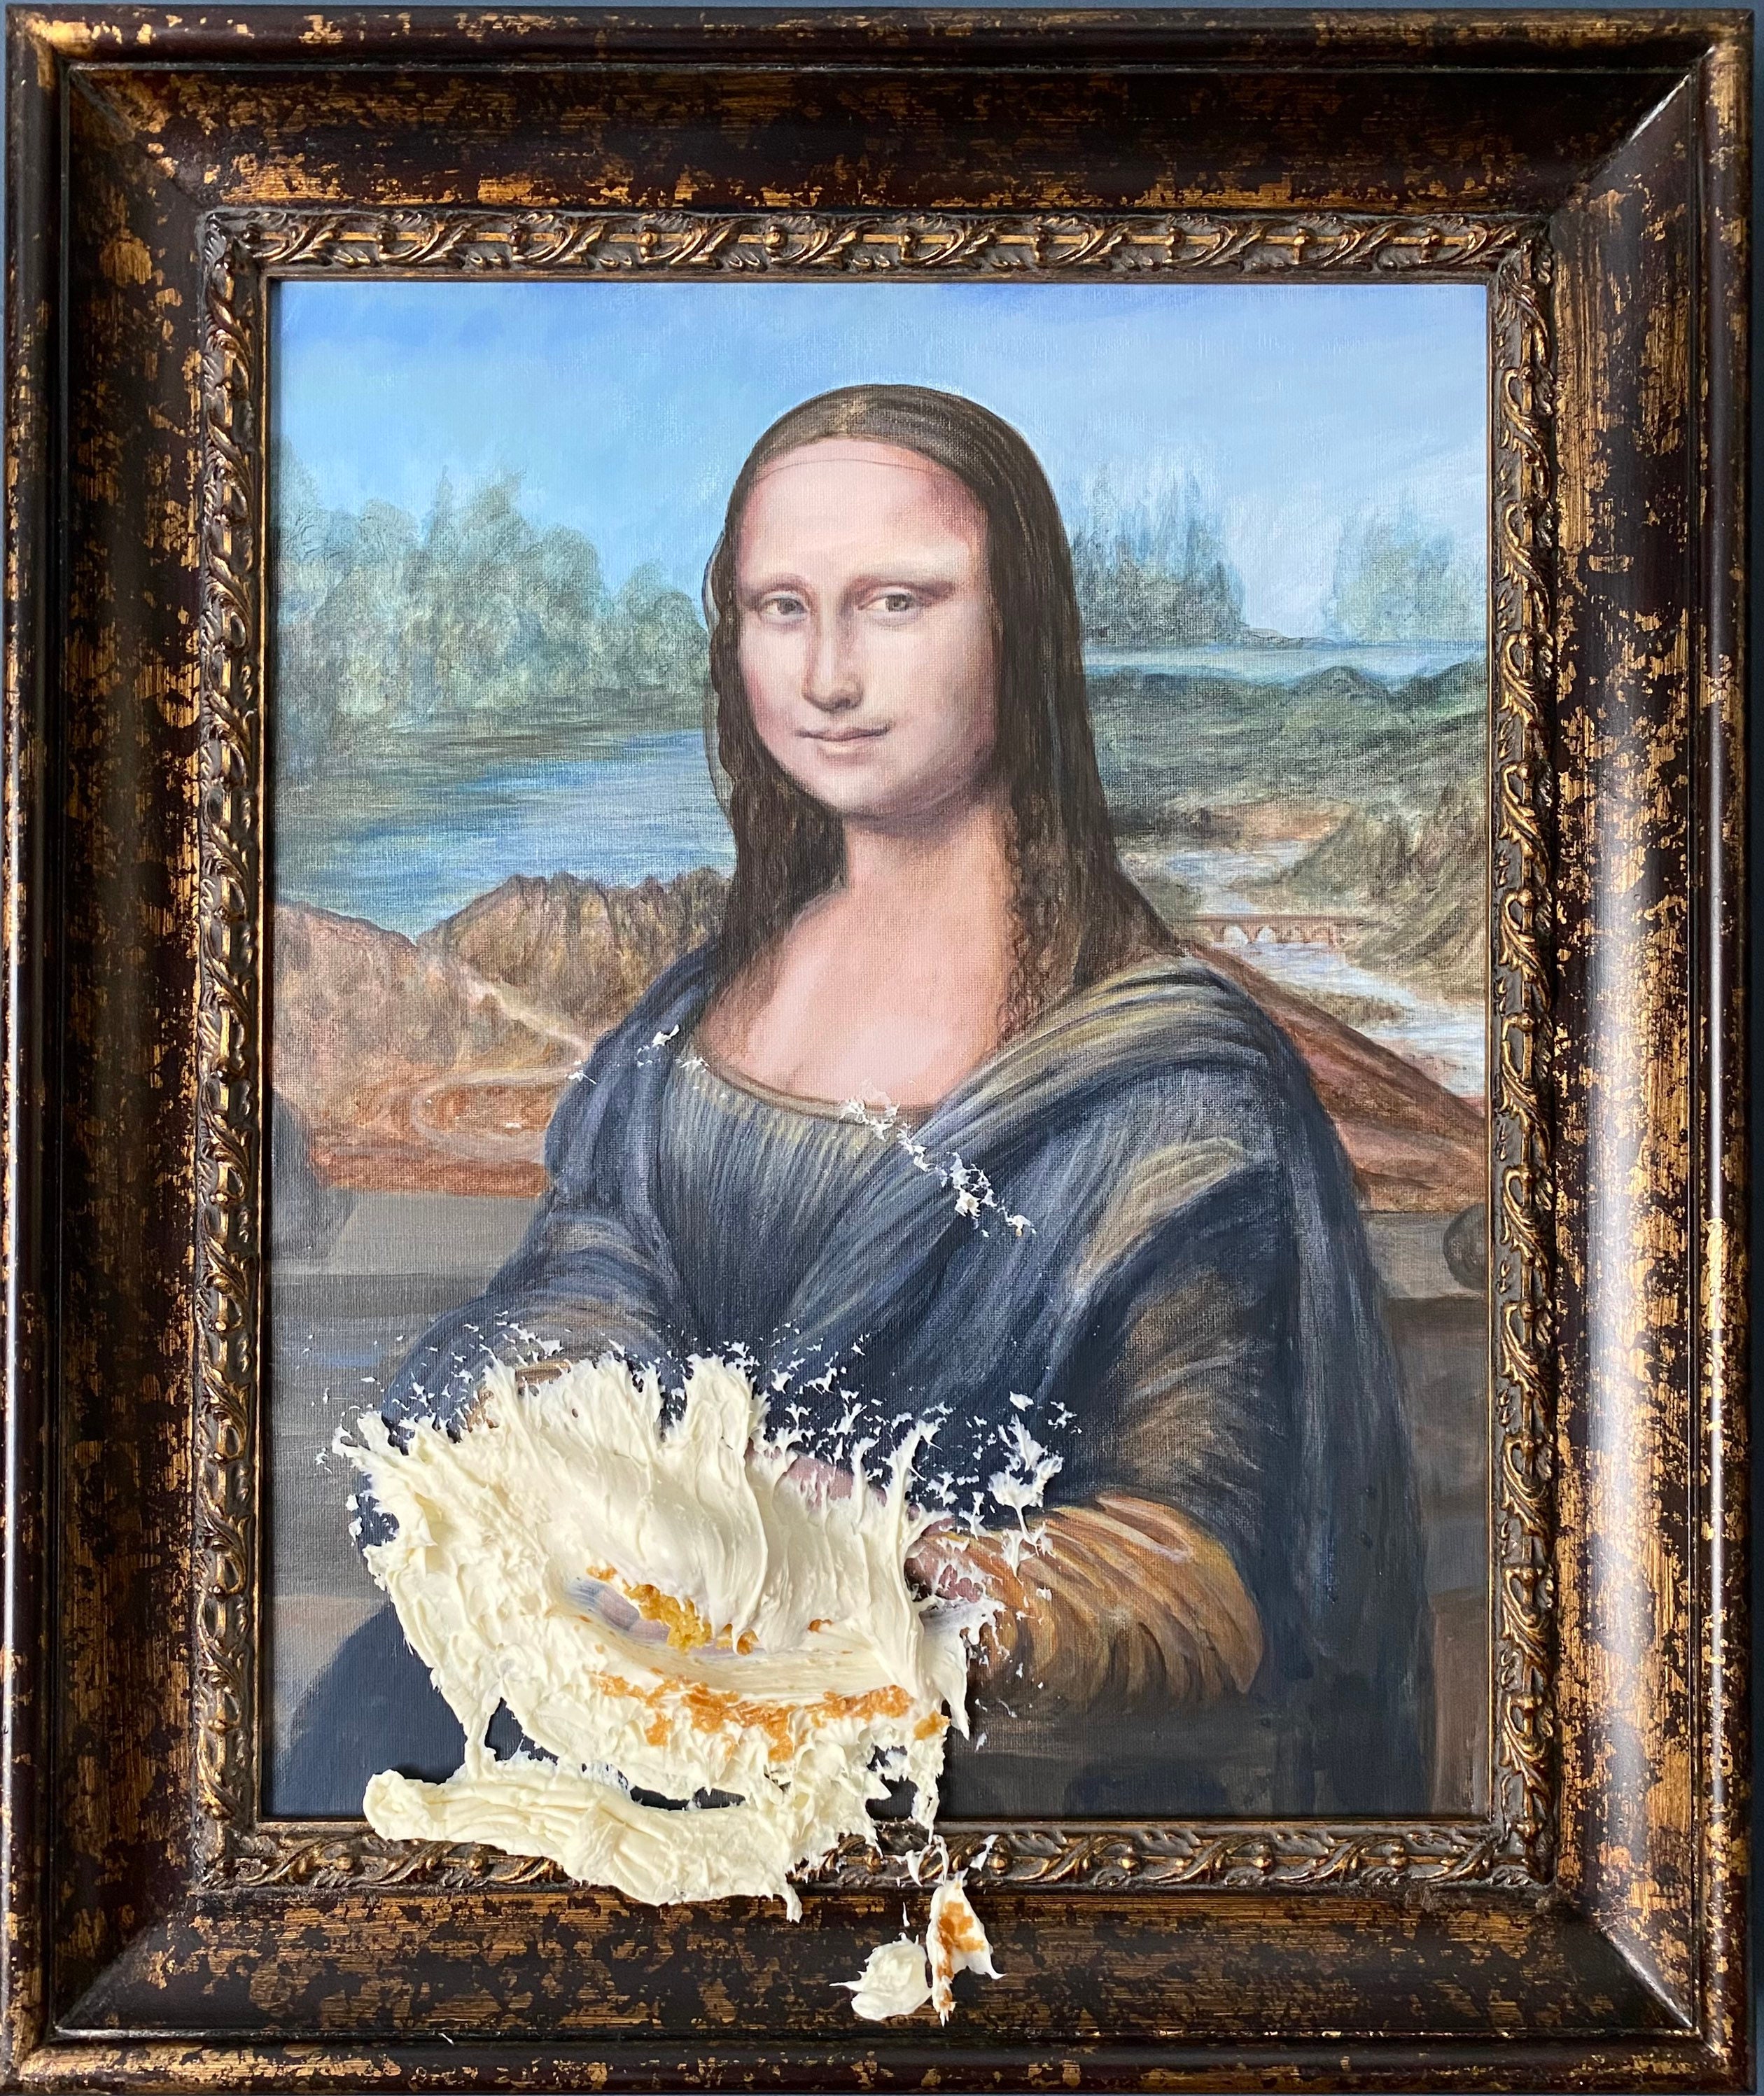 Mona Lisa Renaissance Kitchen Gallery Cheese Grater Art Foodie Fun! PINK